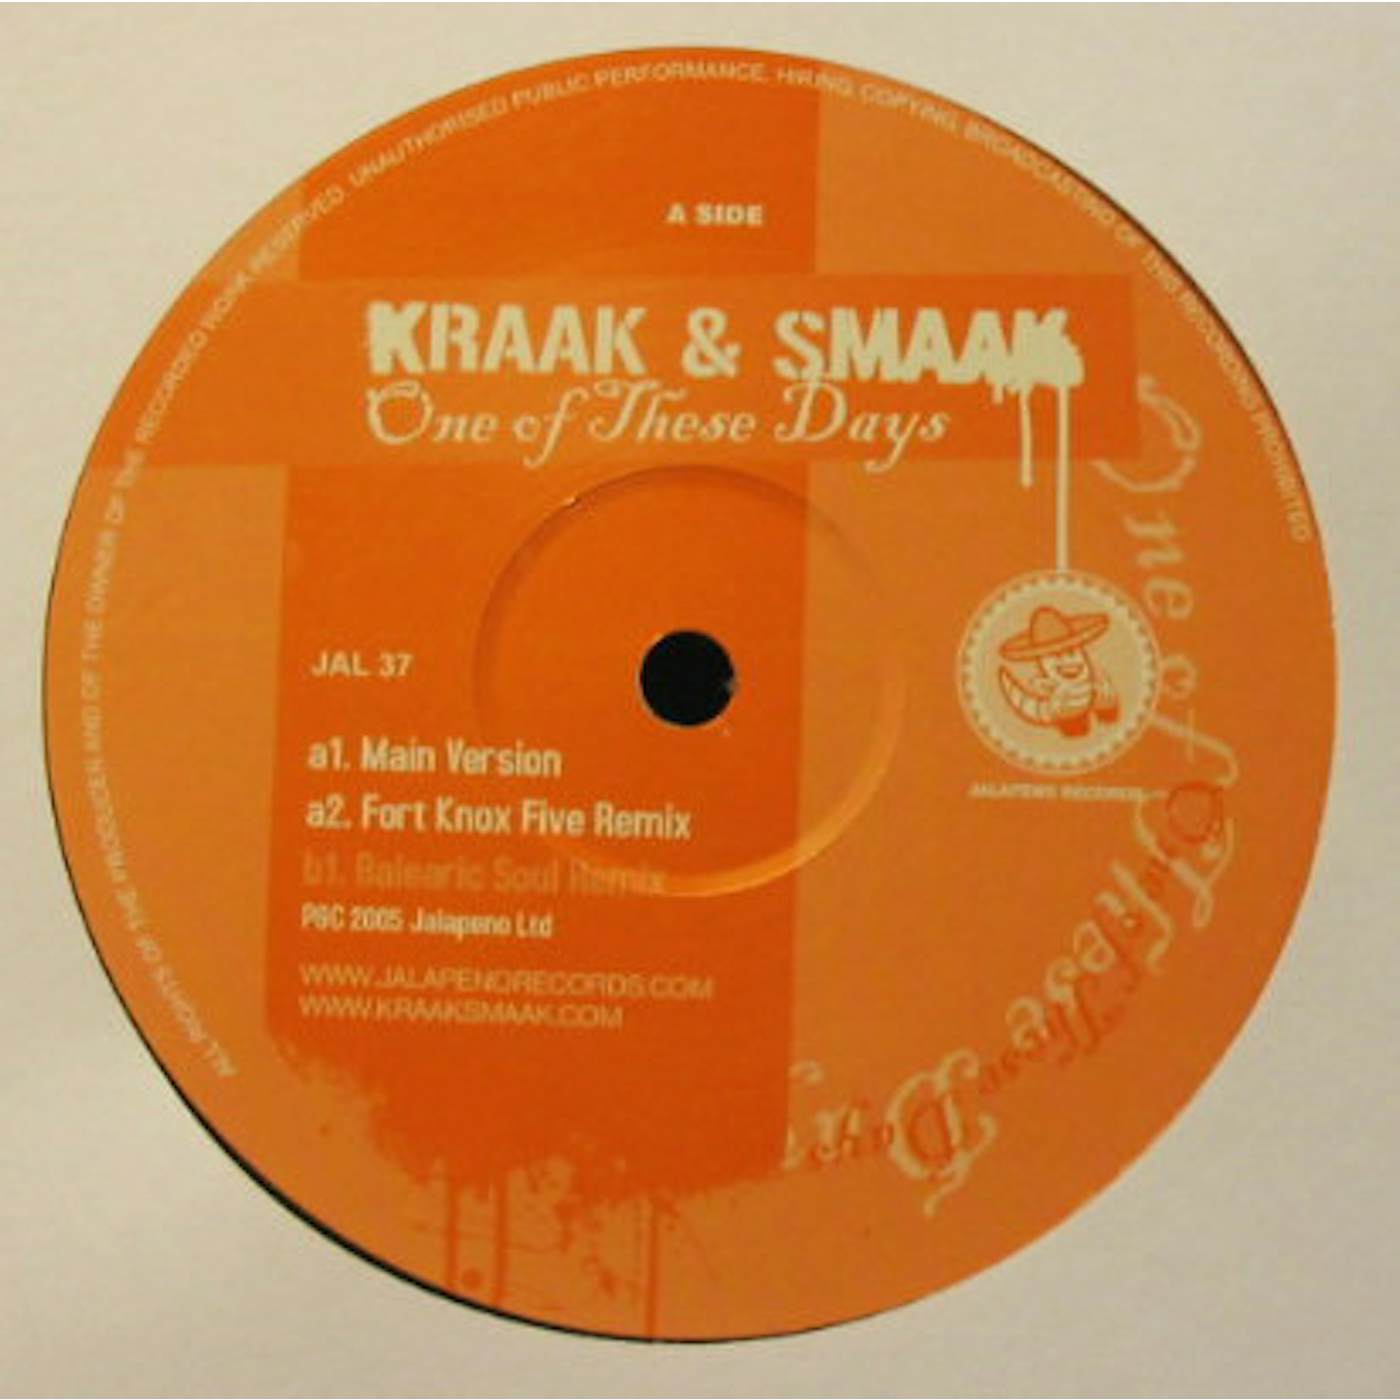 Kraak & Smaak ONE OF THESE DAYS Vinyl Record - UK Release